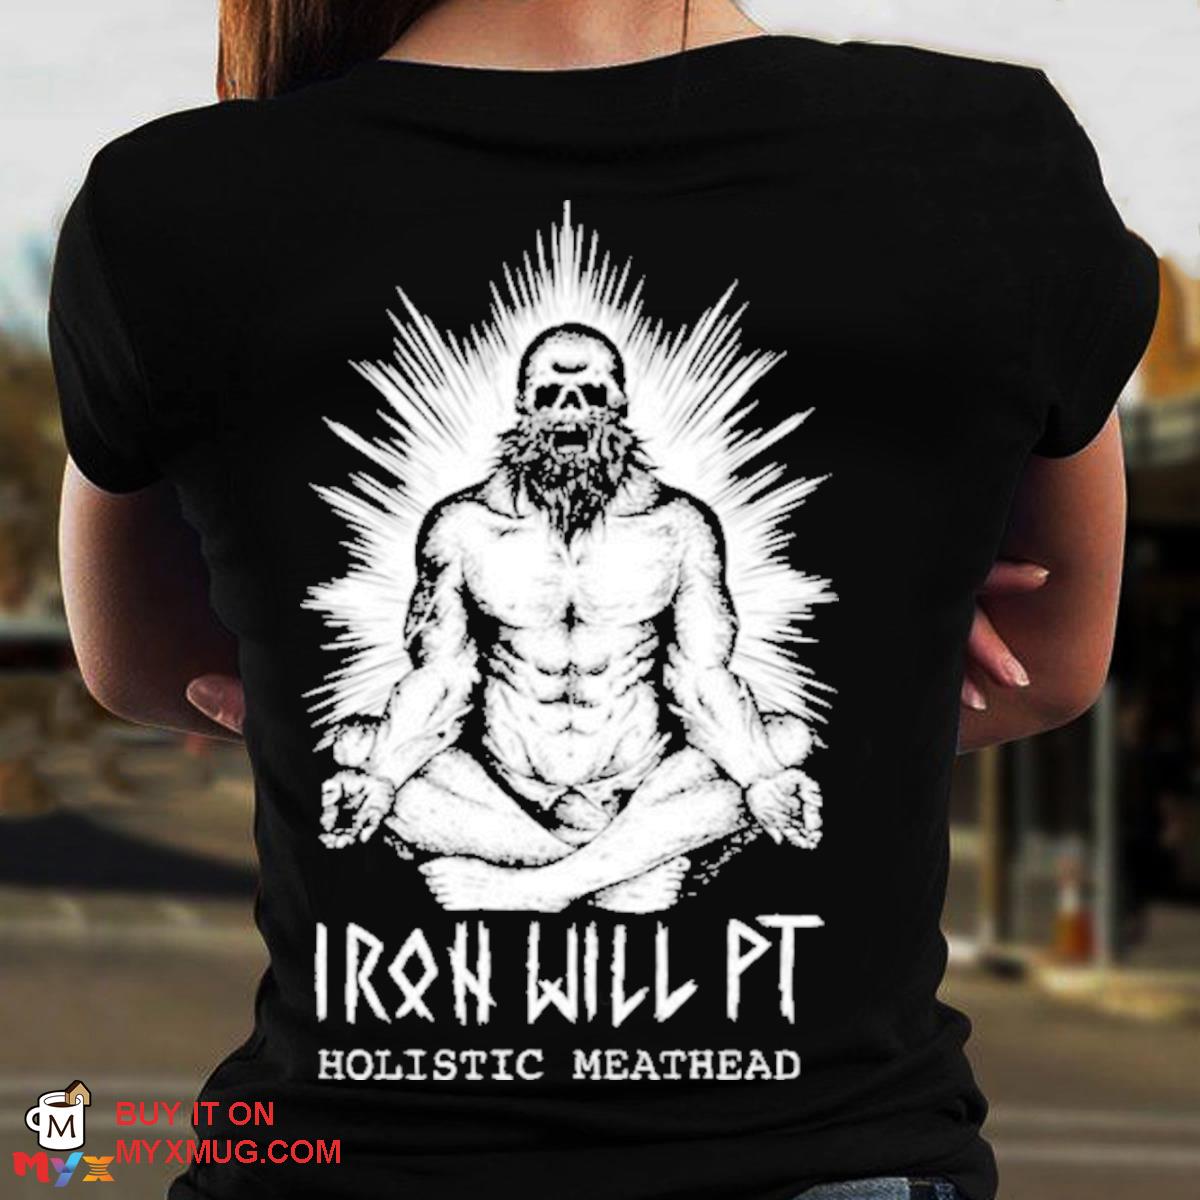 Iron will pt holistic meathead s shirt print on back